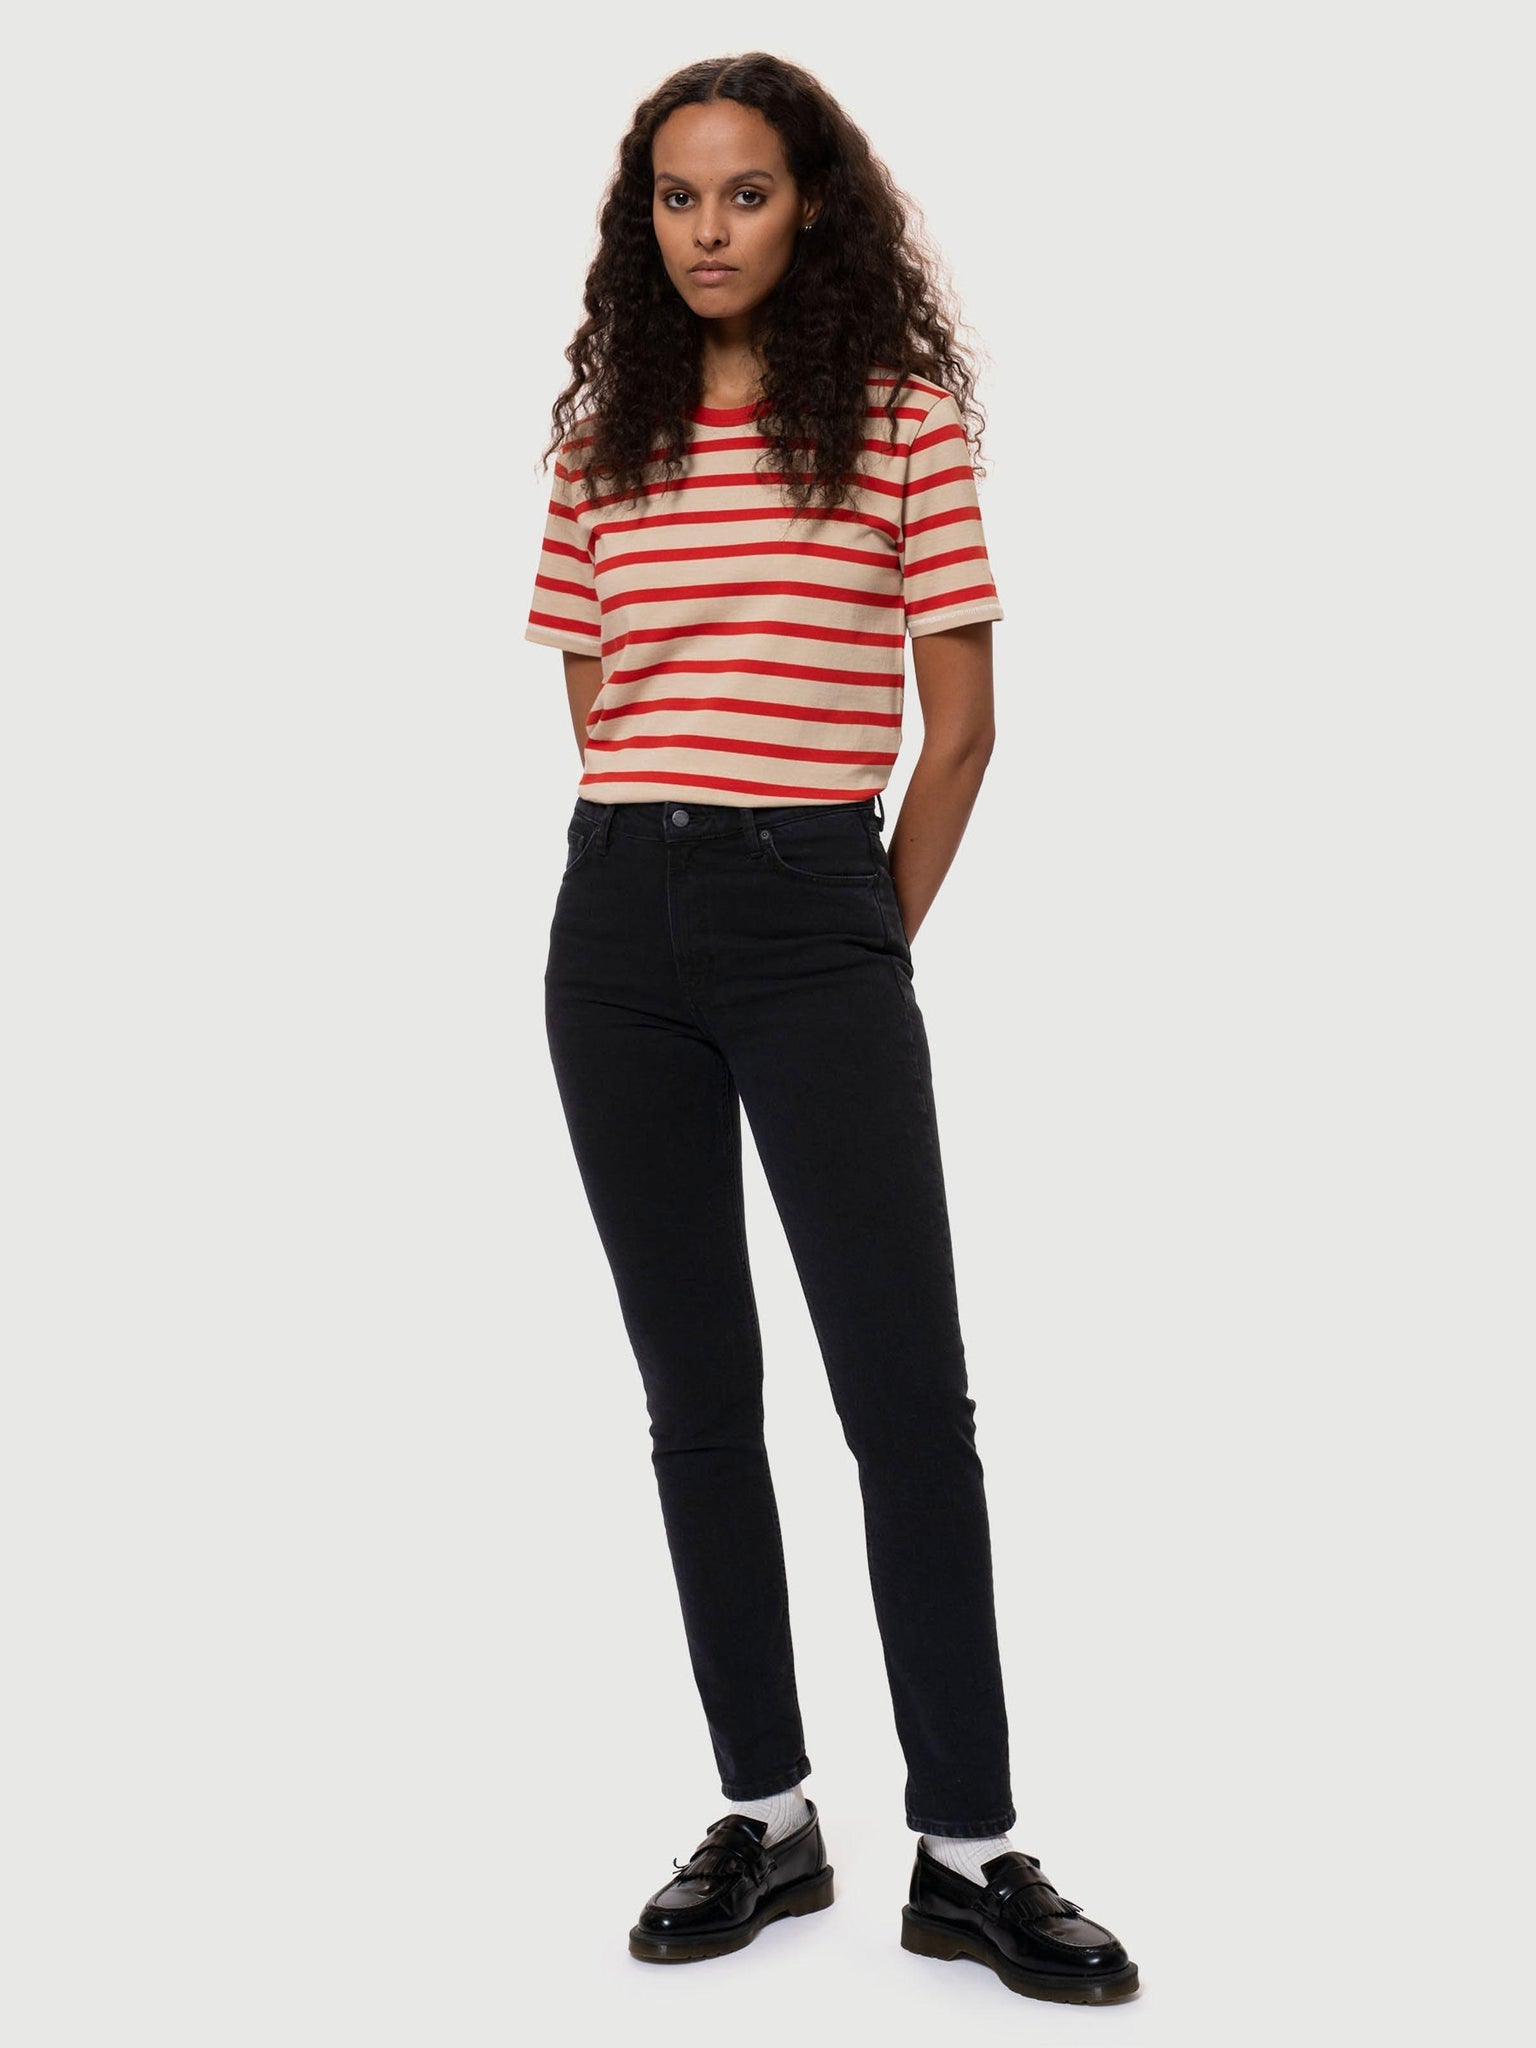 Mellow Mae So Black - INHABIT - Exclusive Stockist of Nudie Jeans